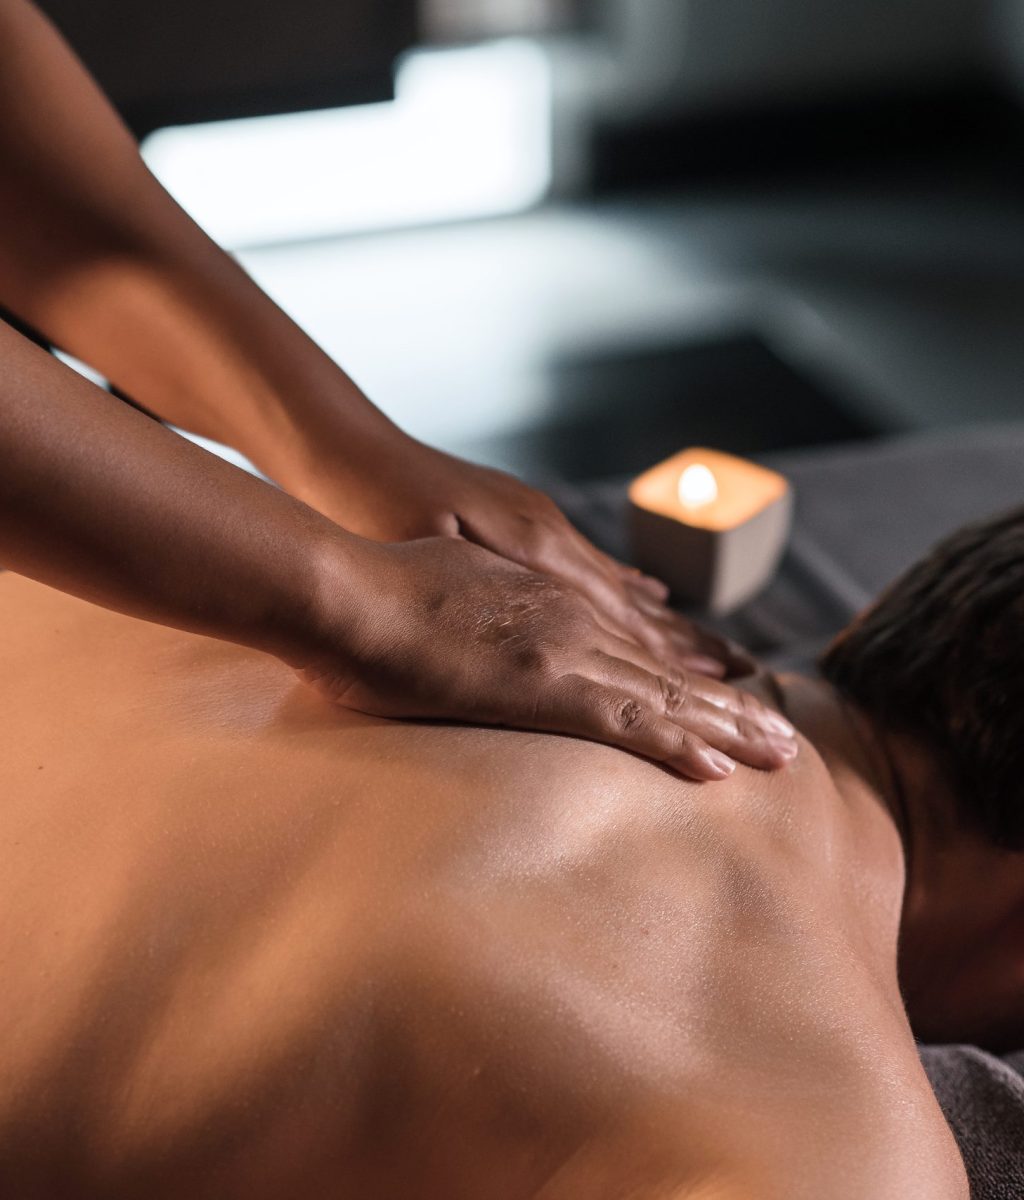 Masseur doing neck massage of man in oriental spa